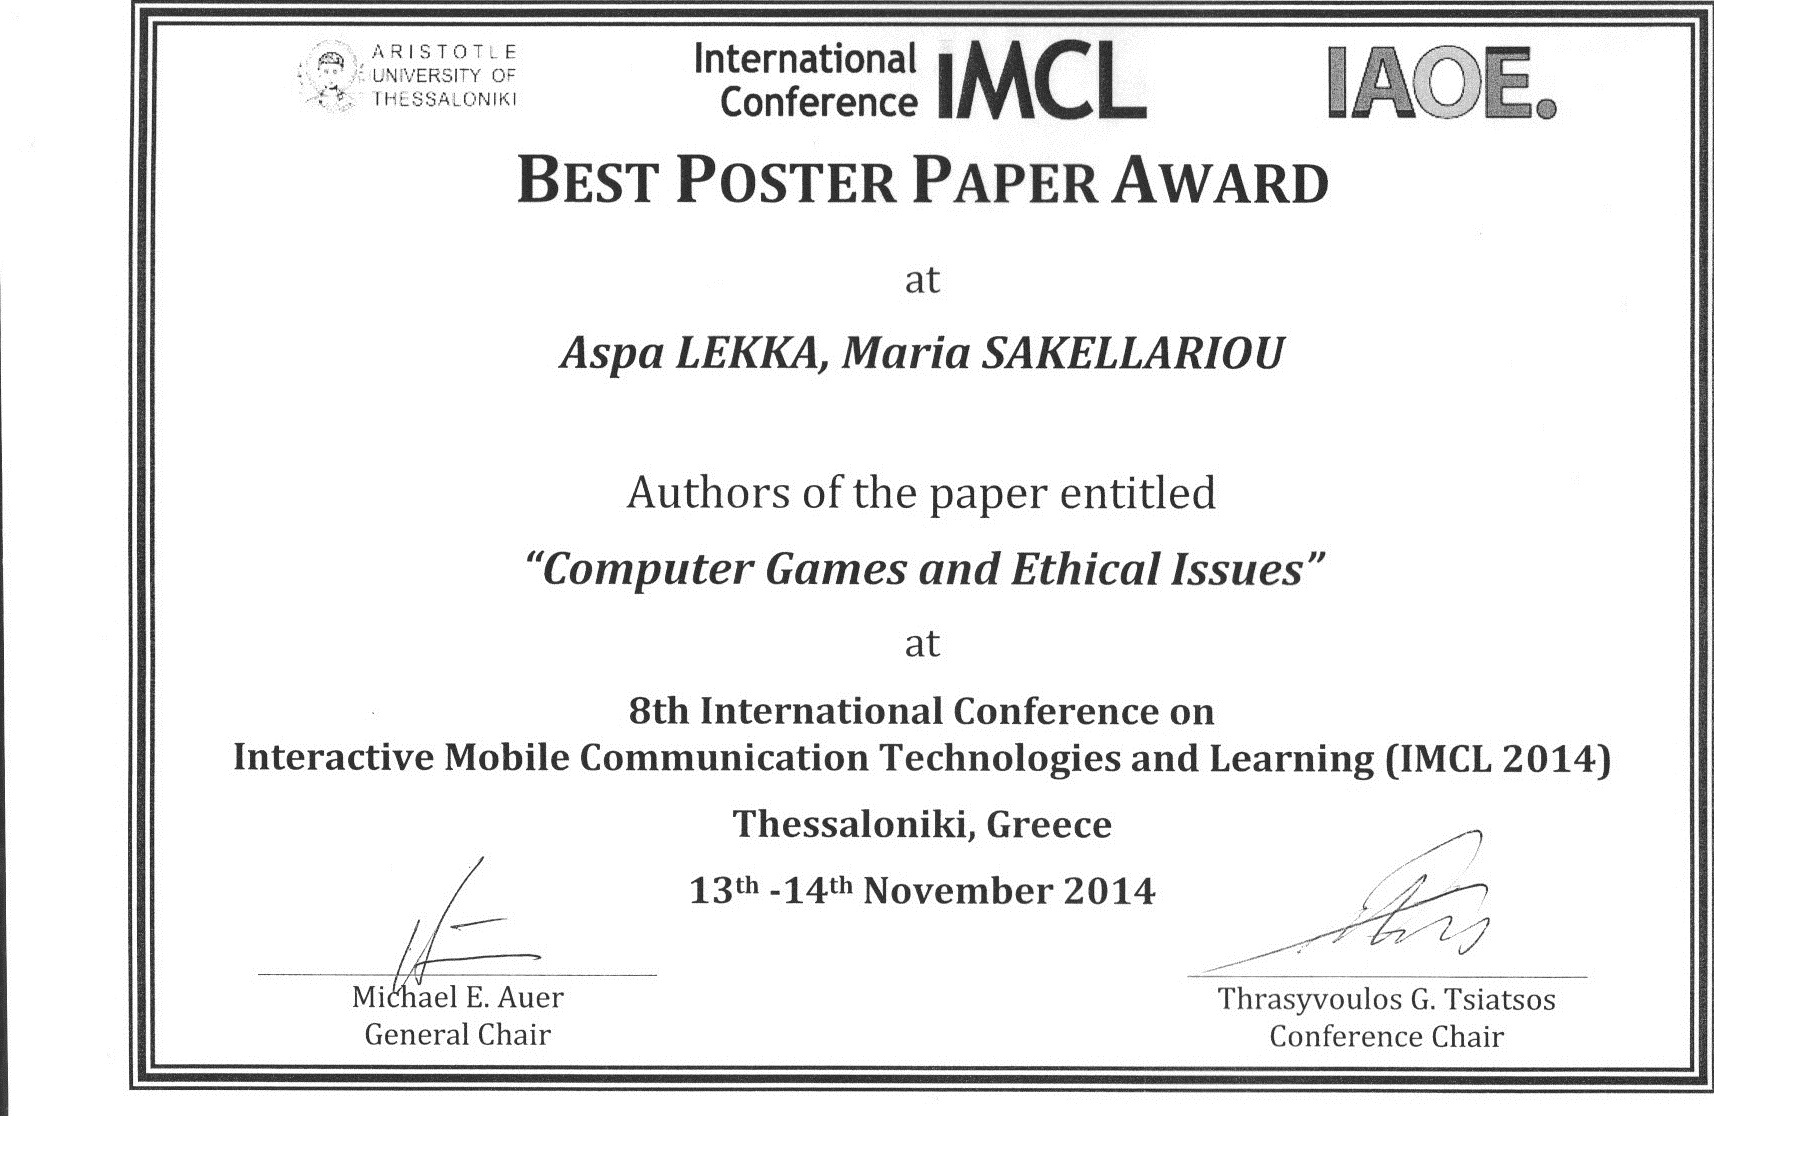 Best Poster Paper Award -A.LEKKAM.SAKELLARIOY